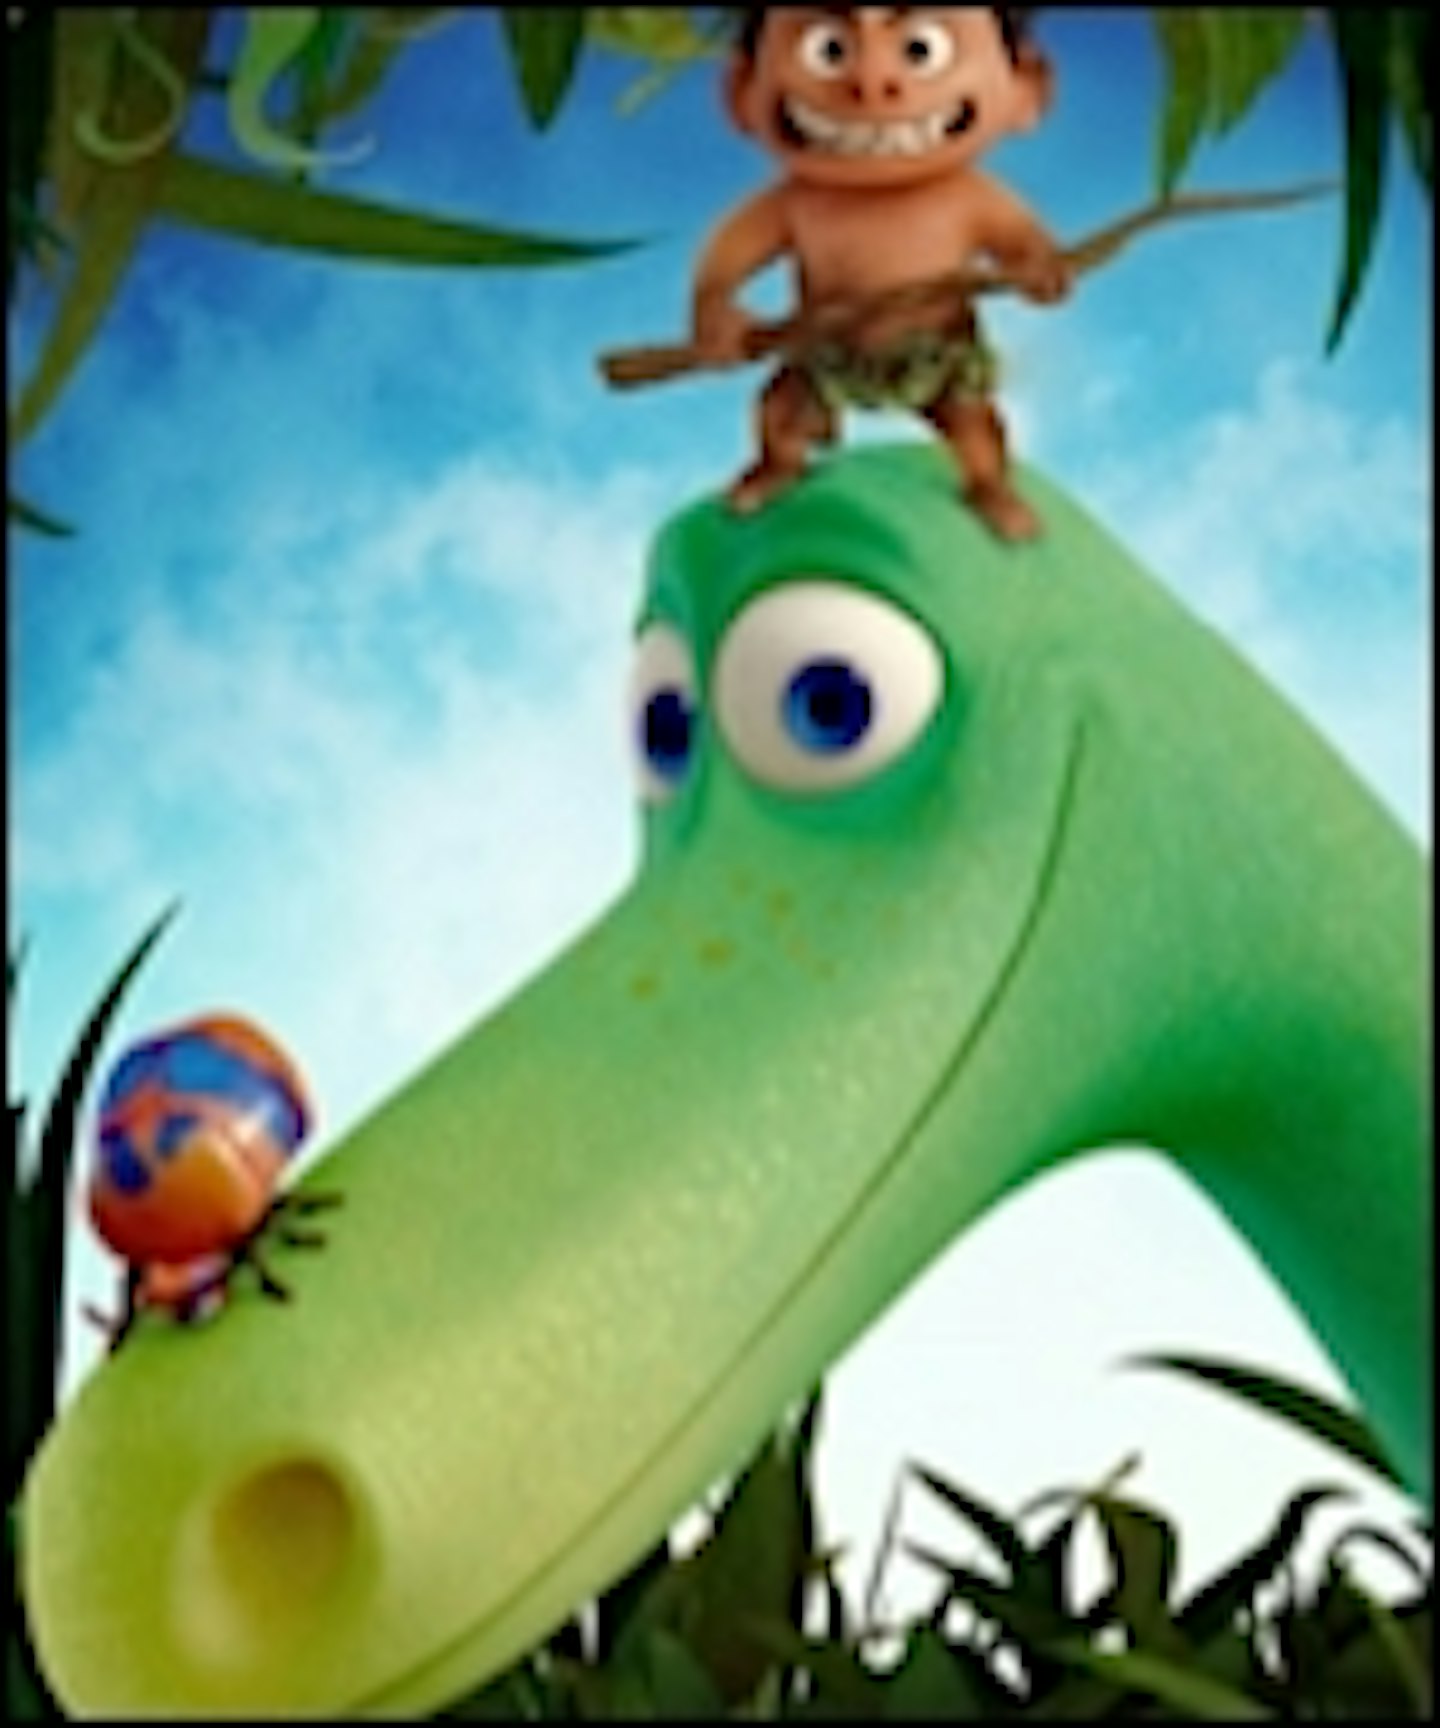 First Teaser For Pixar's The Good Dinosaur